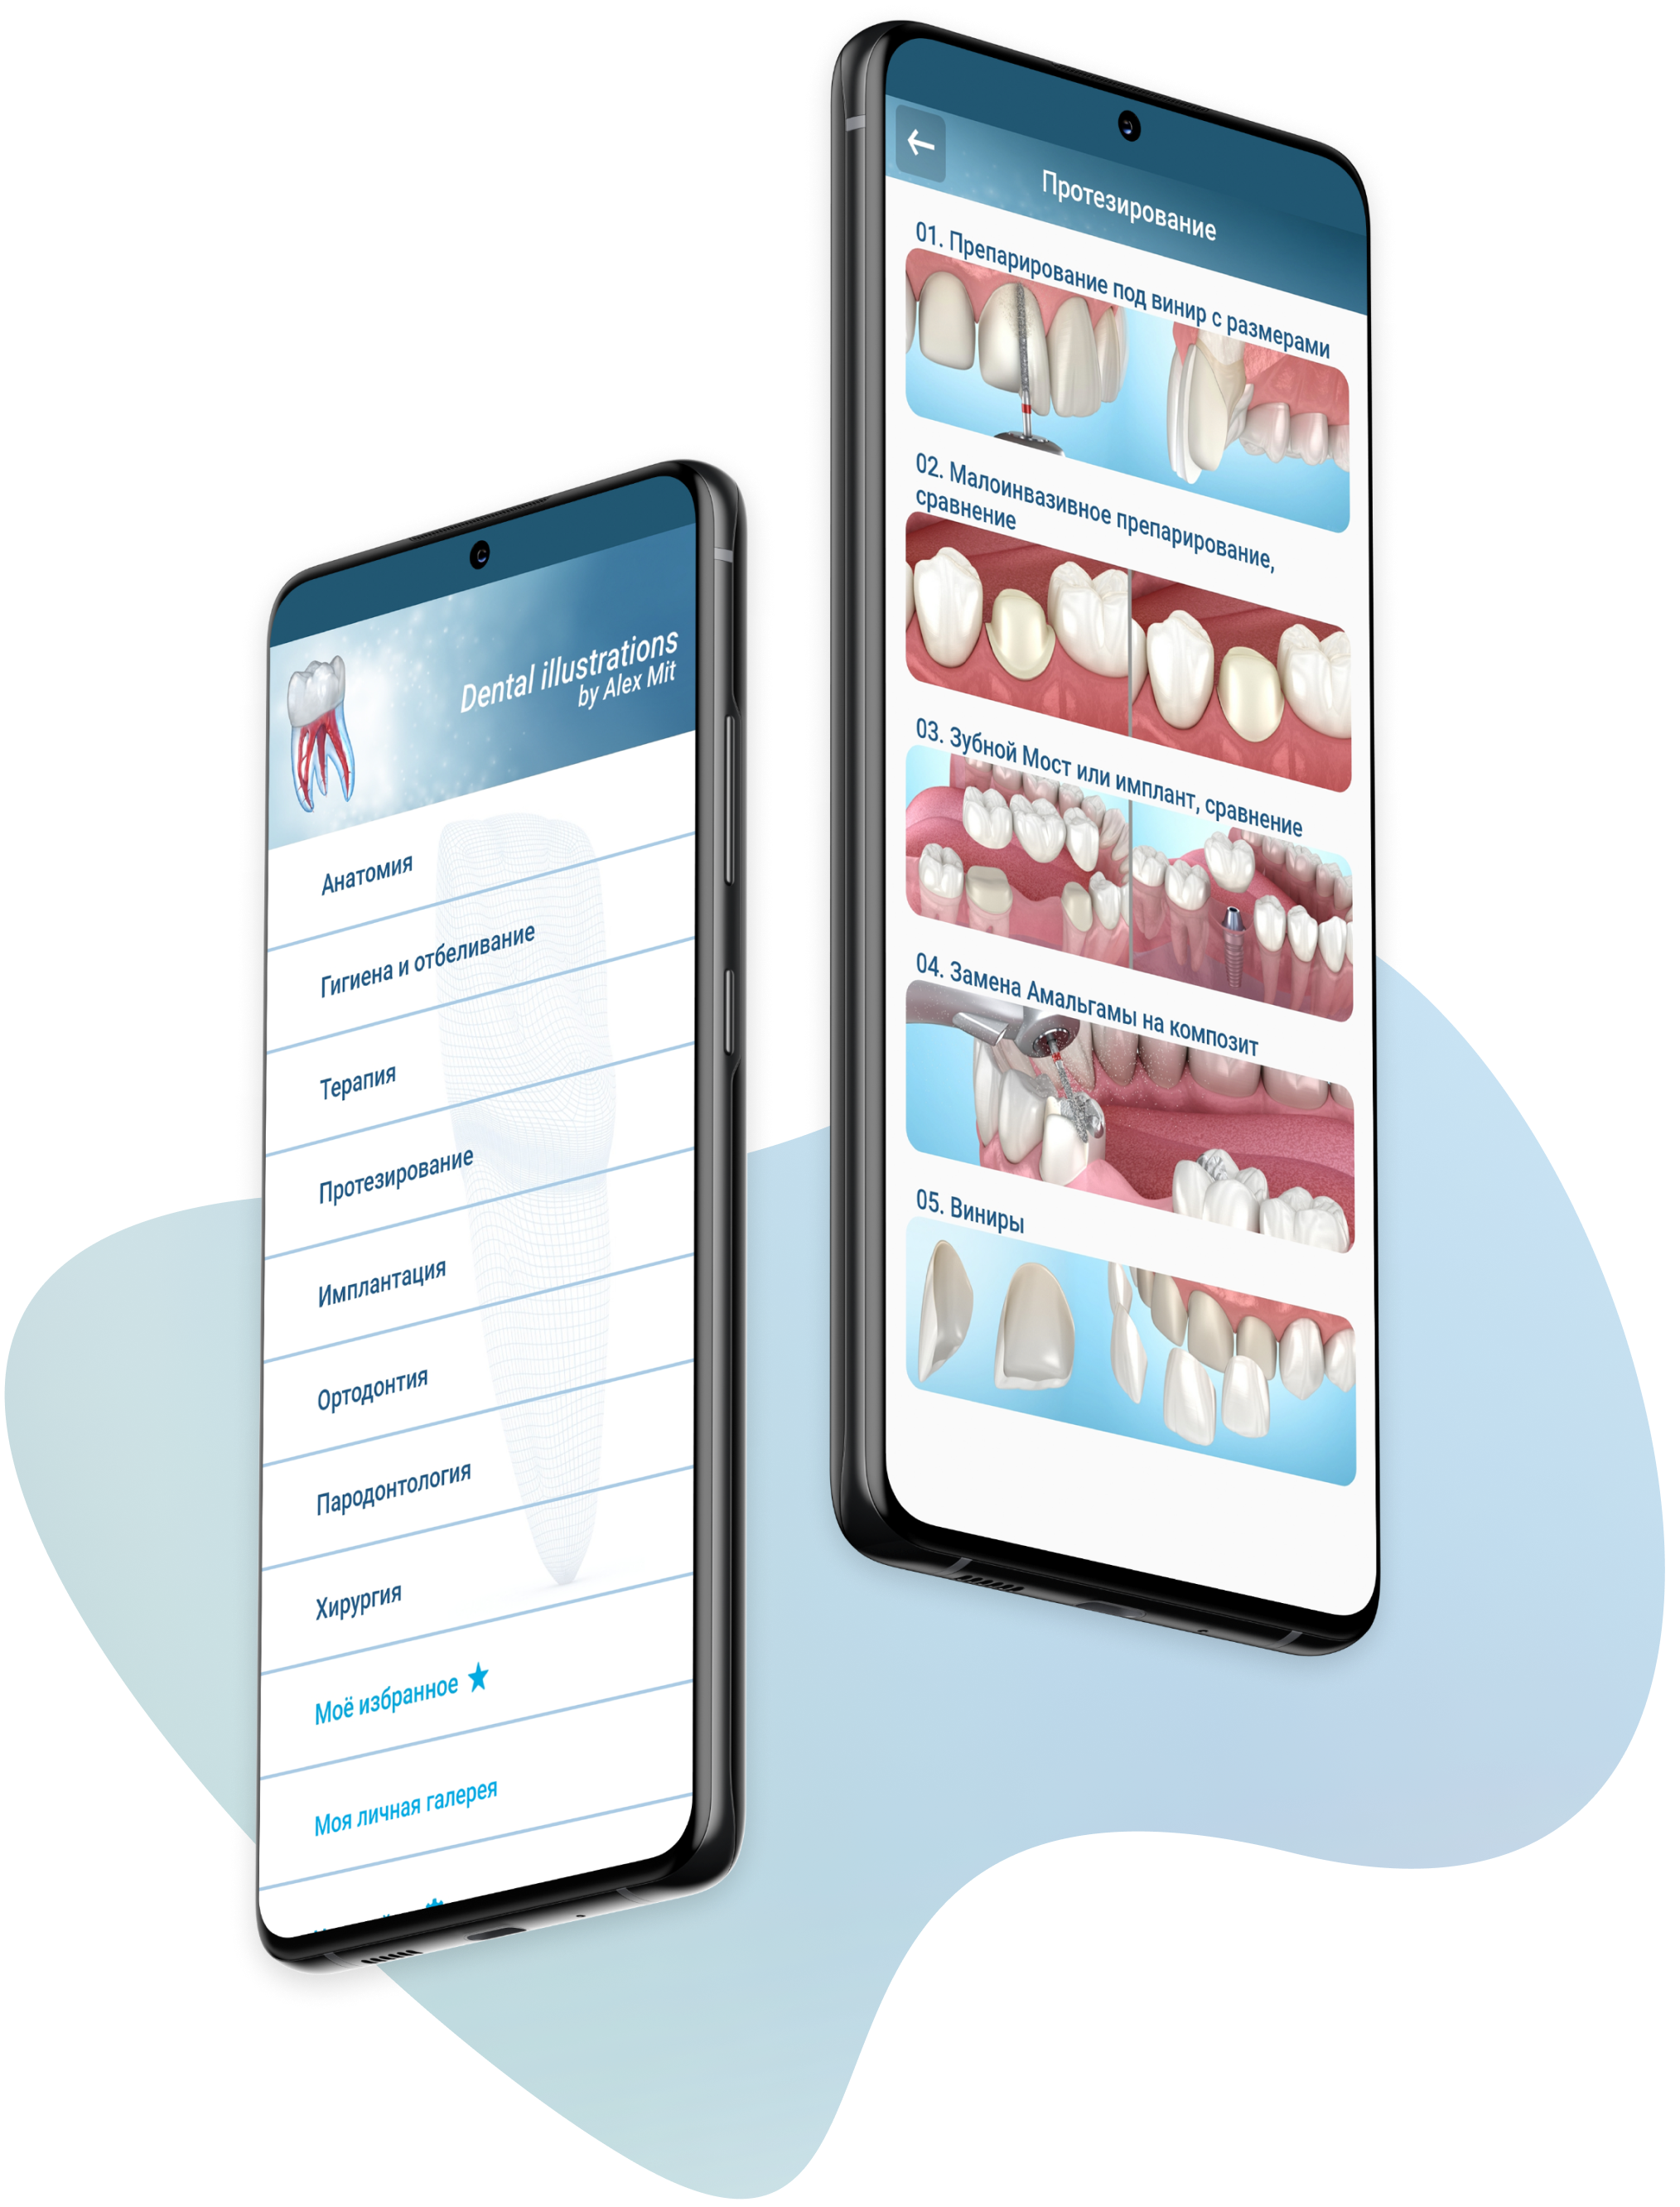 Dental graphics app